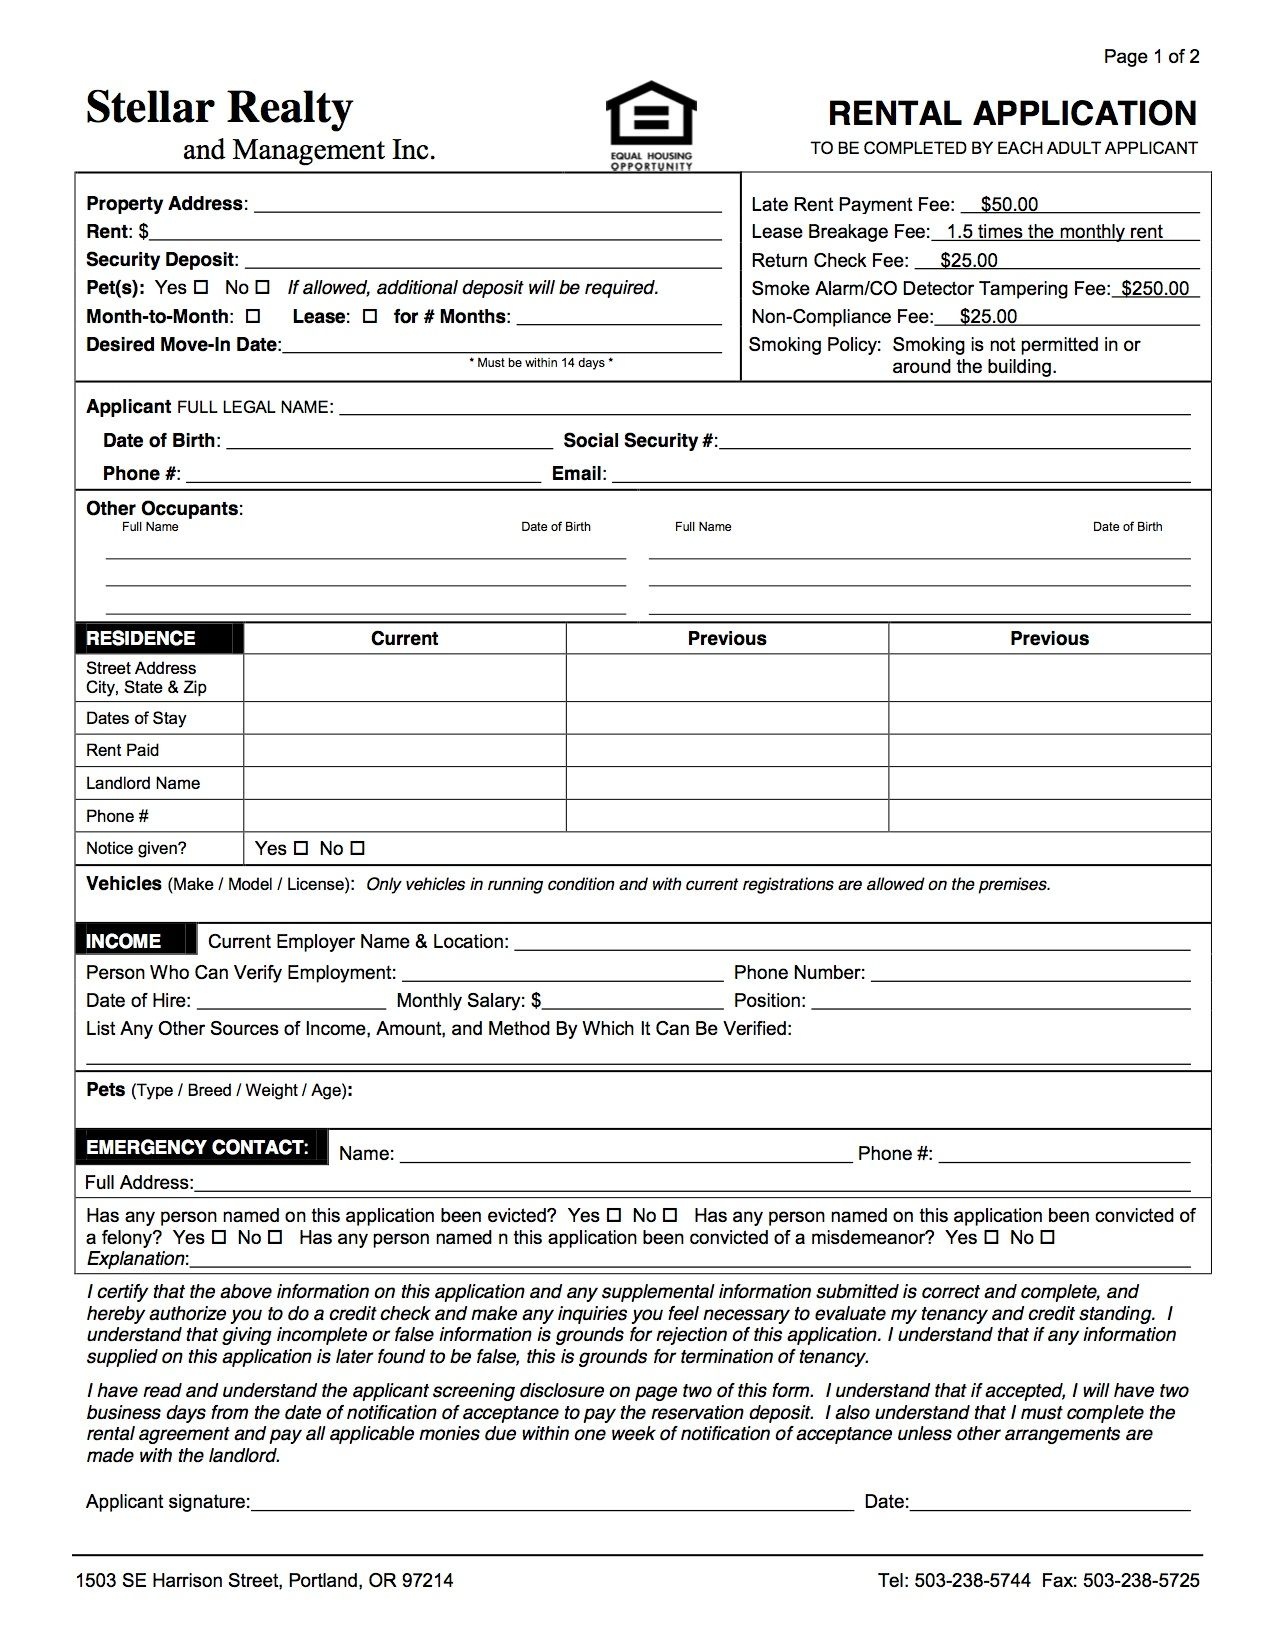 Rental Application Form Free Printable Printable Forms Free Online